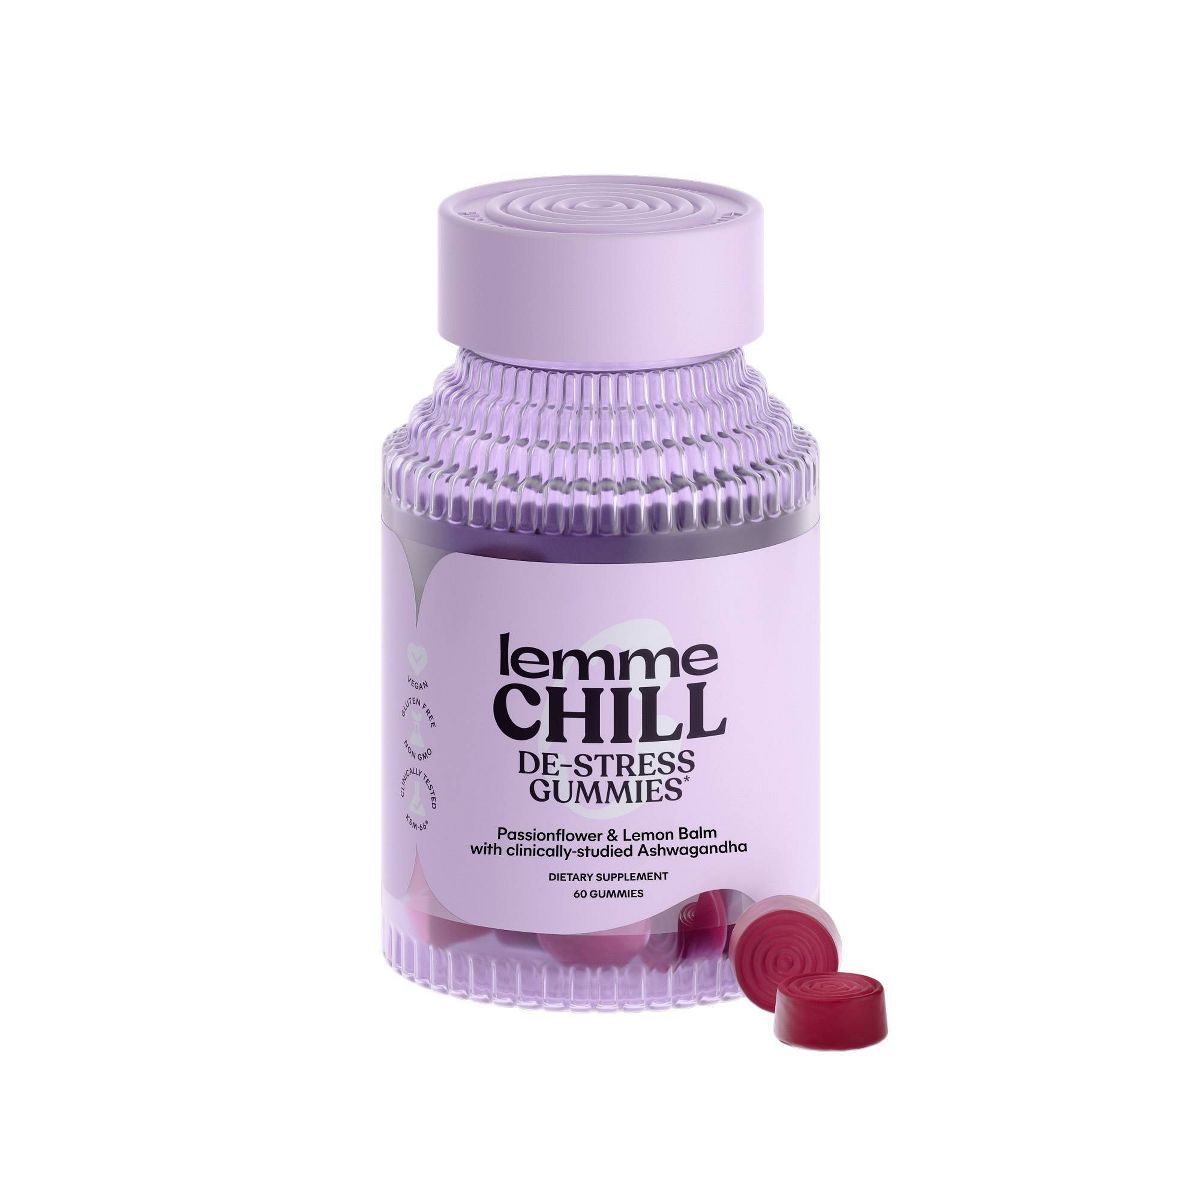 Lemme Chill De-Stress Ashwagandha Vegan Gummies - 60ct | Target